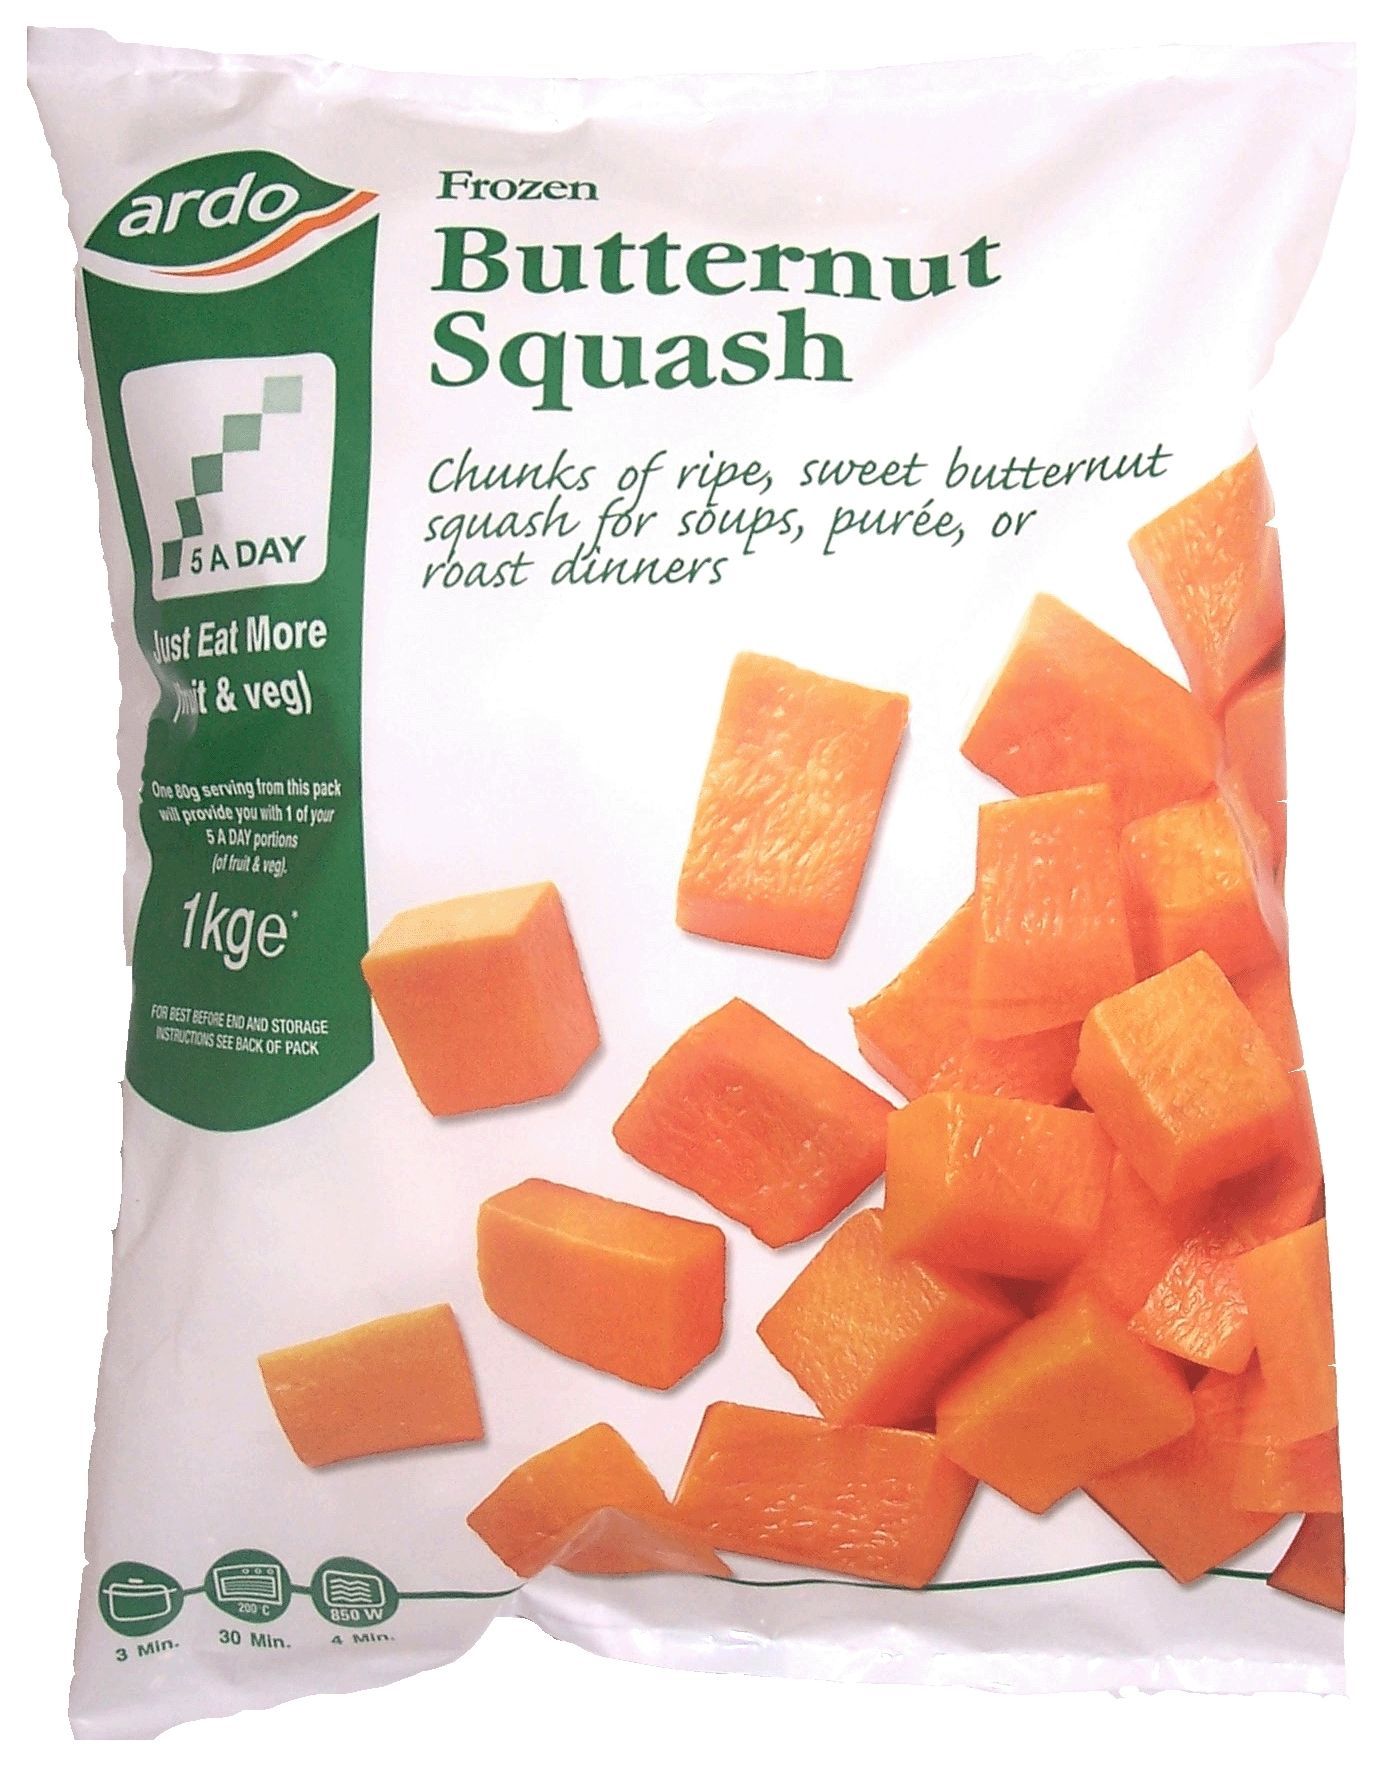 Ardo Butternut Squash 1kg - Frozen